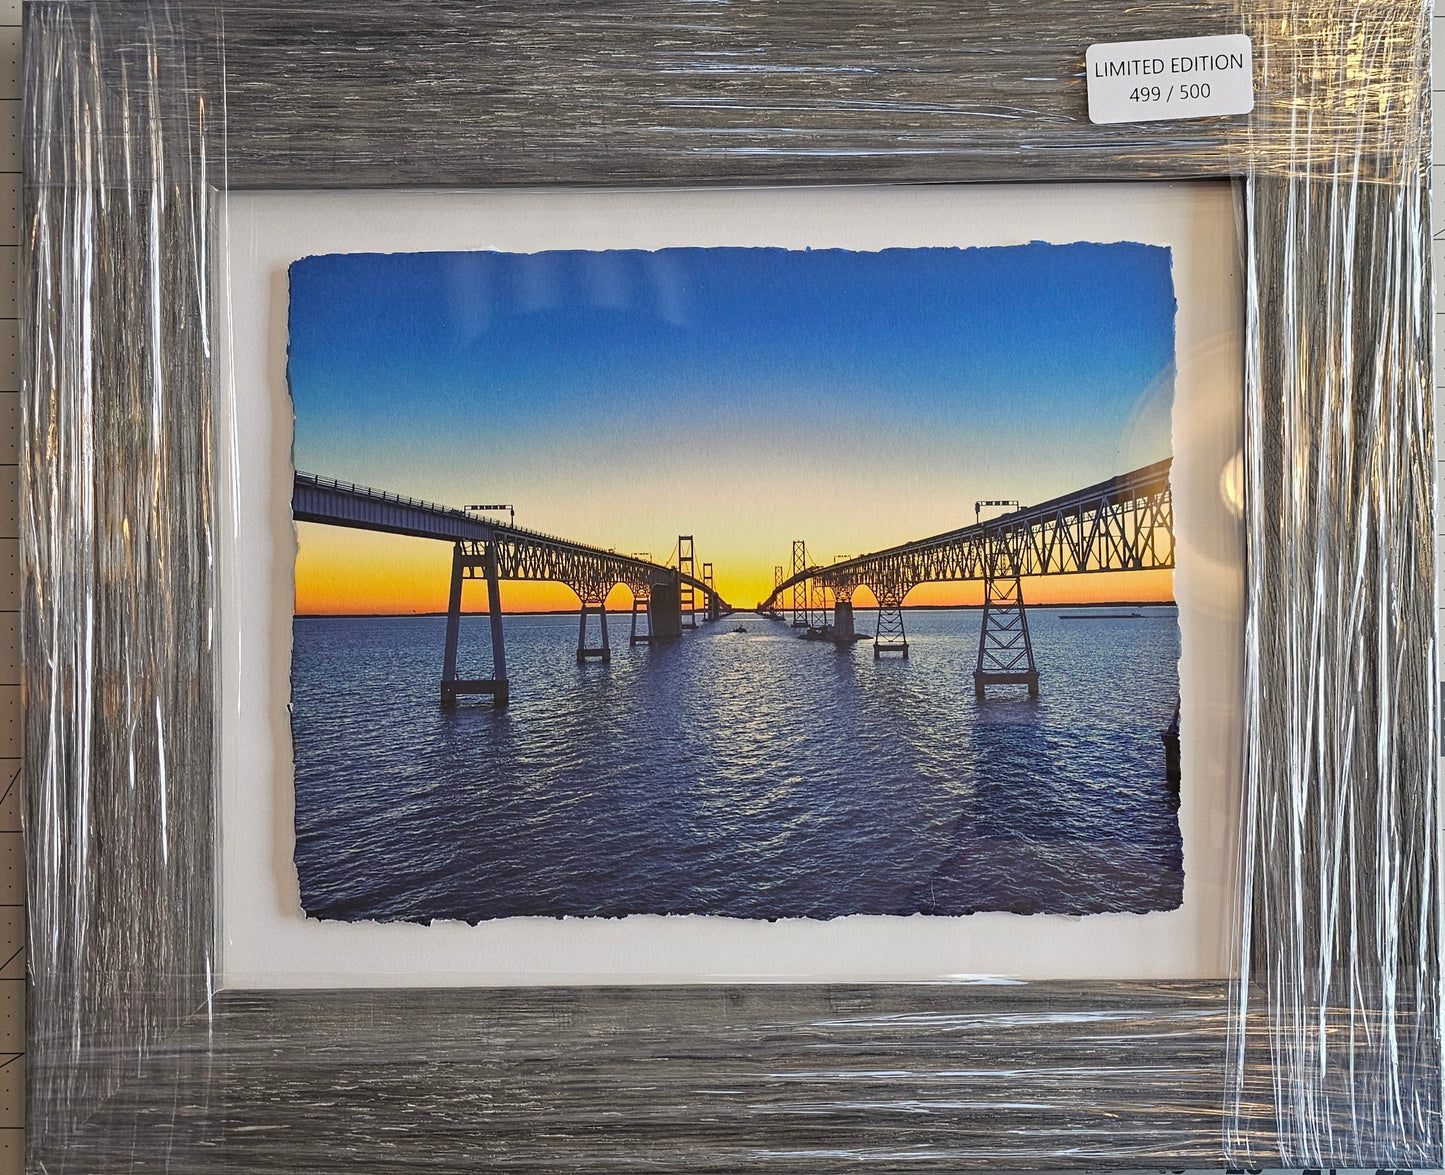 Daybreak at the Chesapeake Bay Bridge